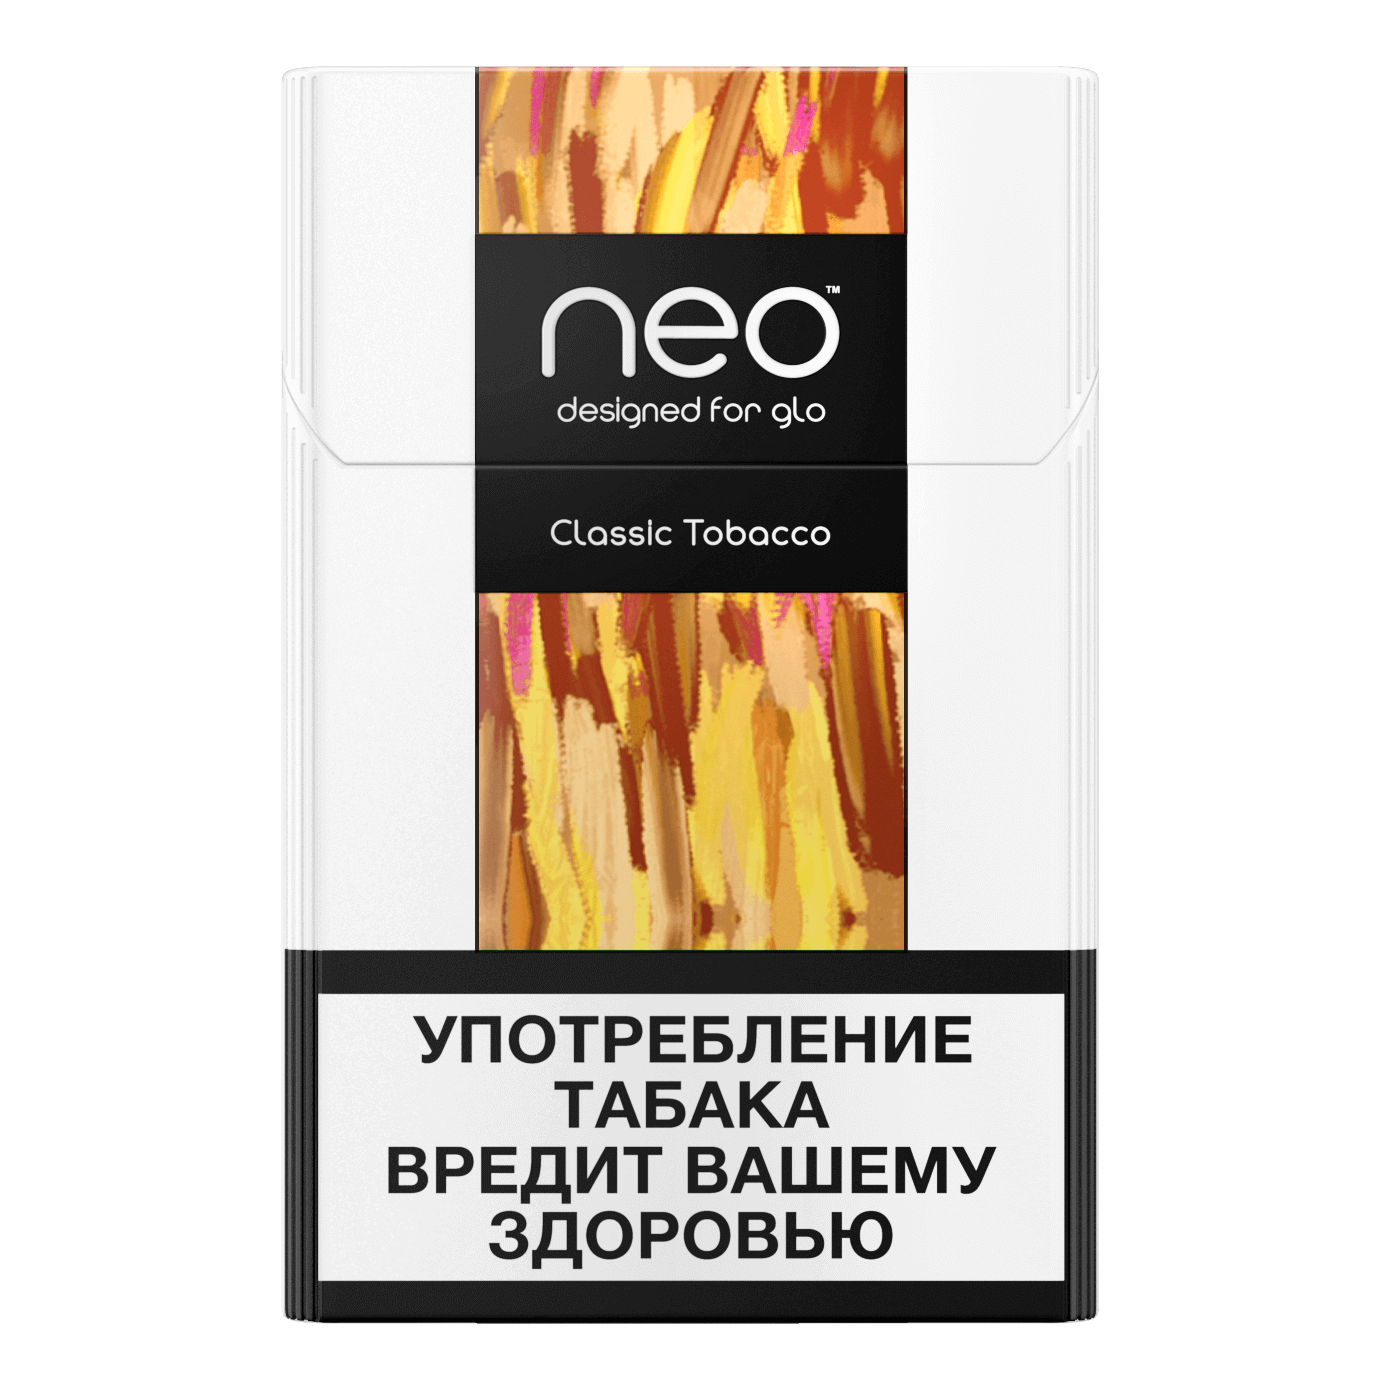 Neo стики купить. Neo стики для Glo Classic Tobacco. Стики Neo деми creamy Tobacco. Стики Neo Классик Тобакко. Стики для гло 2.0.